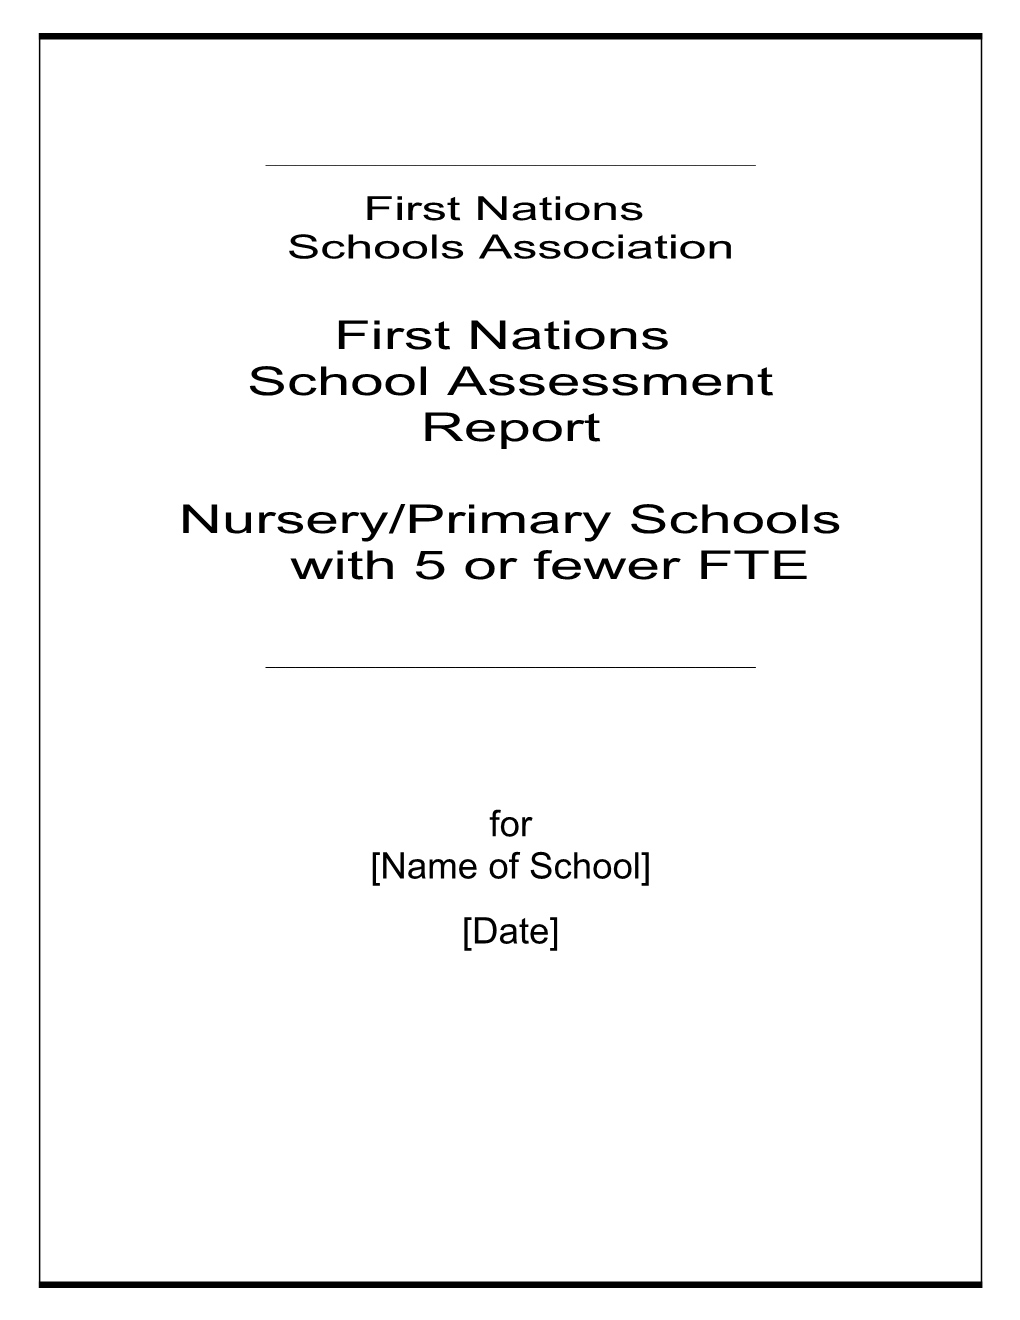 First Nations School Assessment